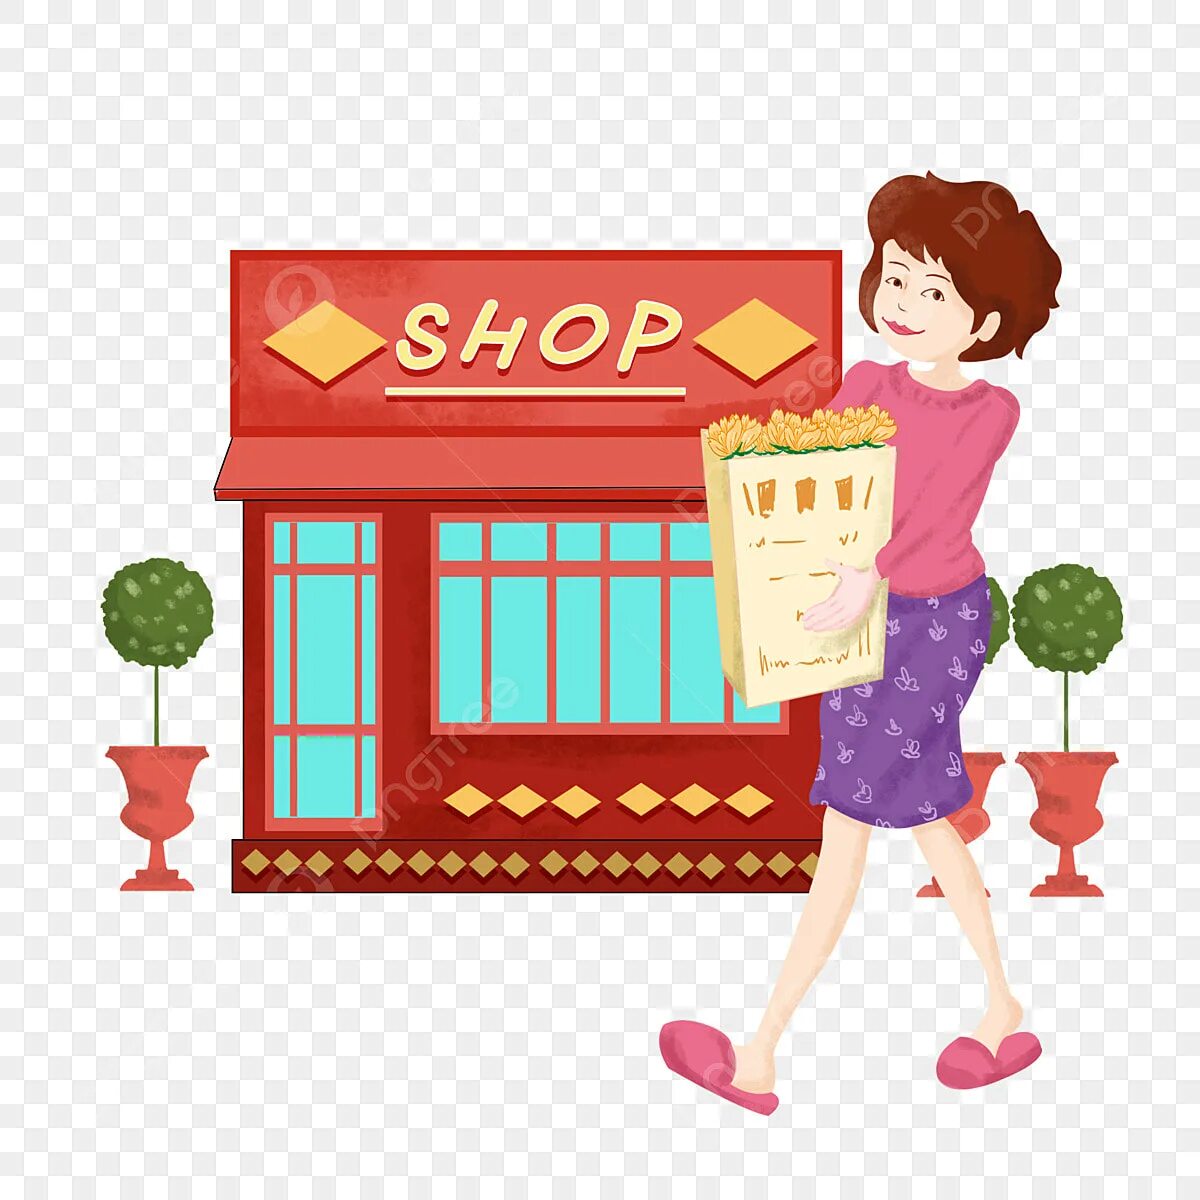 We can go shopping. Магазин иллюстрация. Магазин рисунок. Нарисованный shop. Shop иллюстрация.